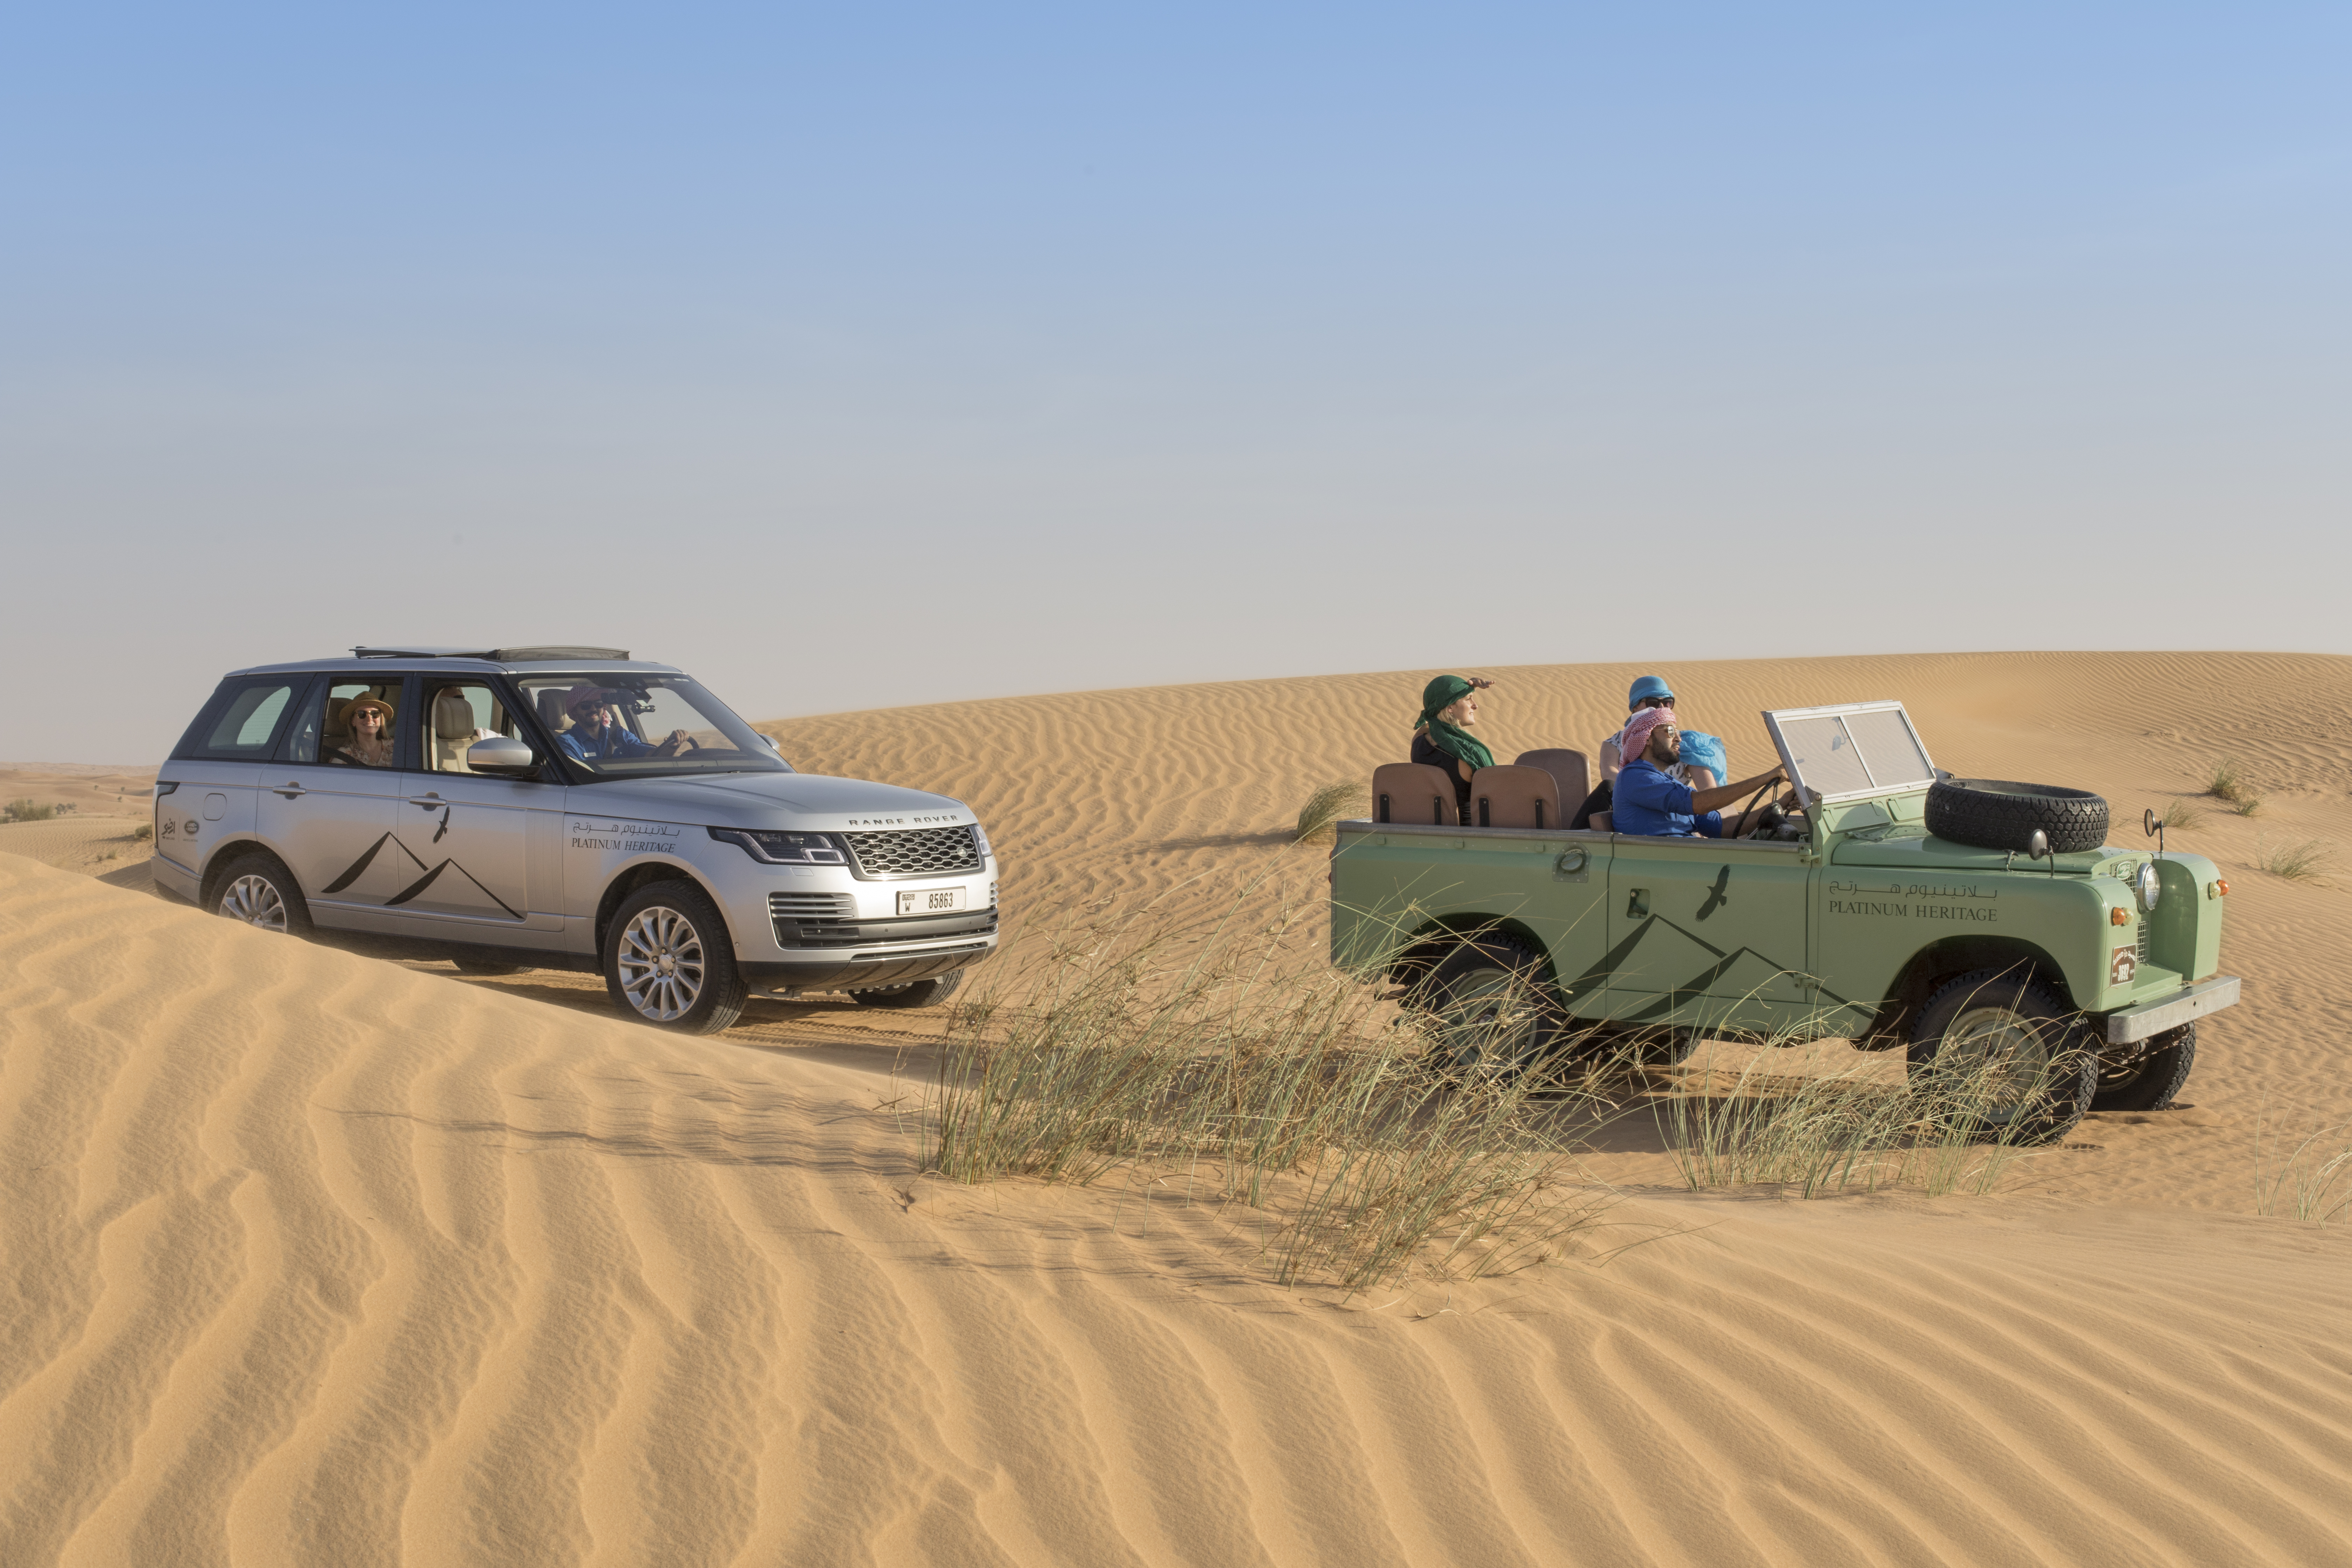 How to choose the best Dubai desert safari!